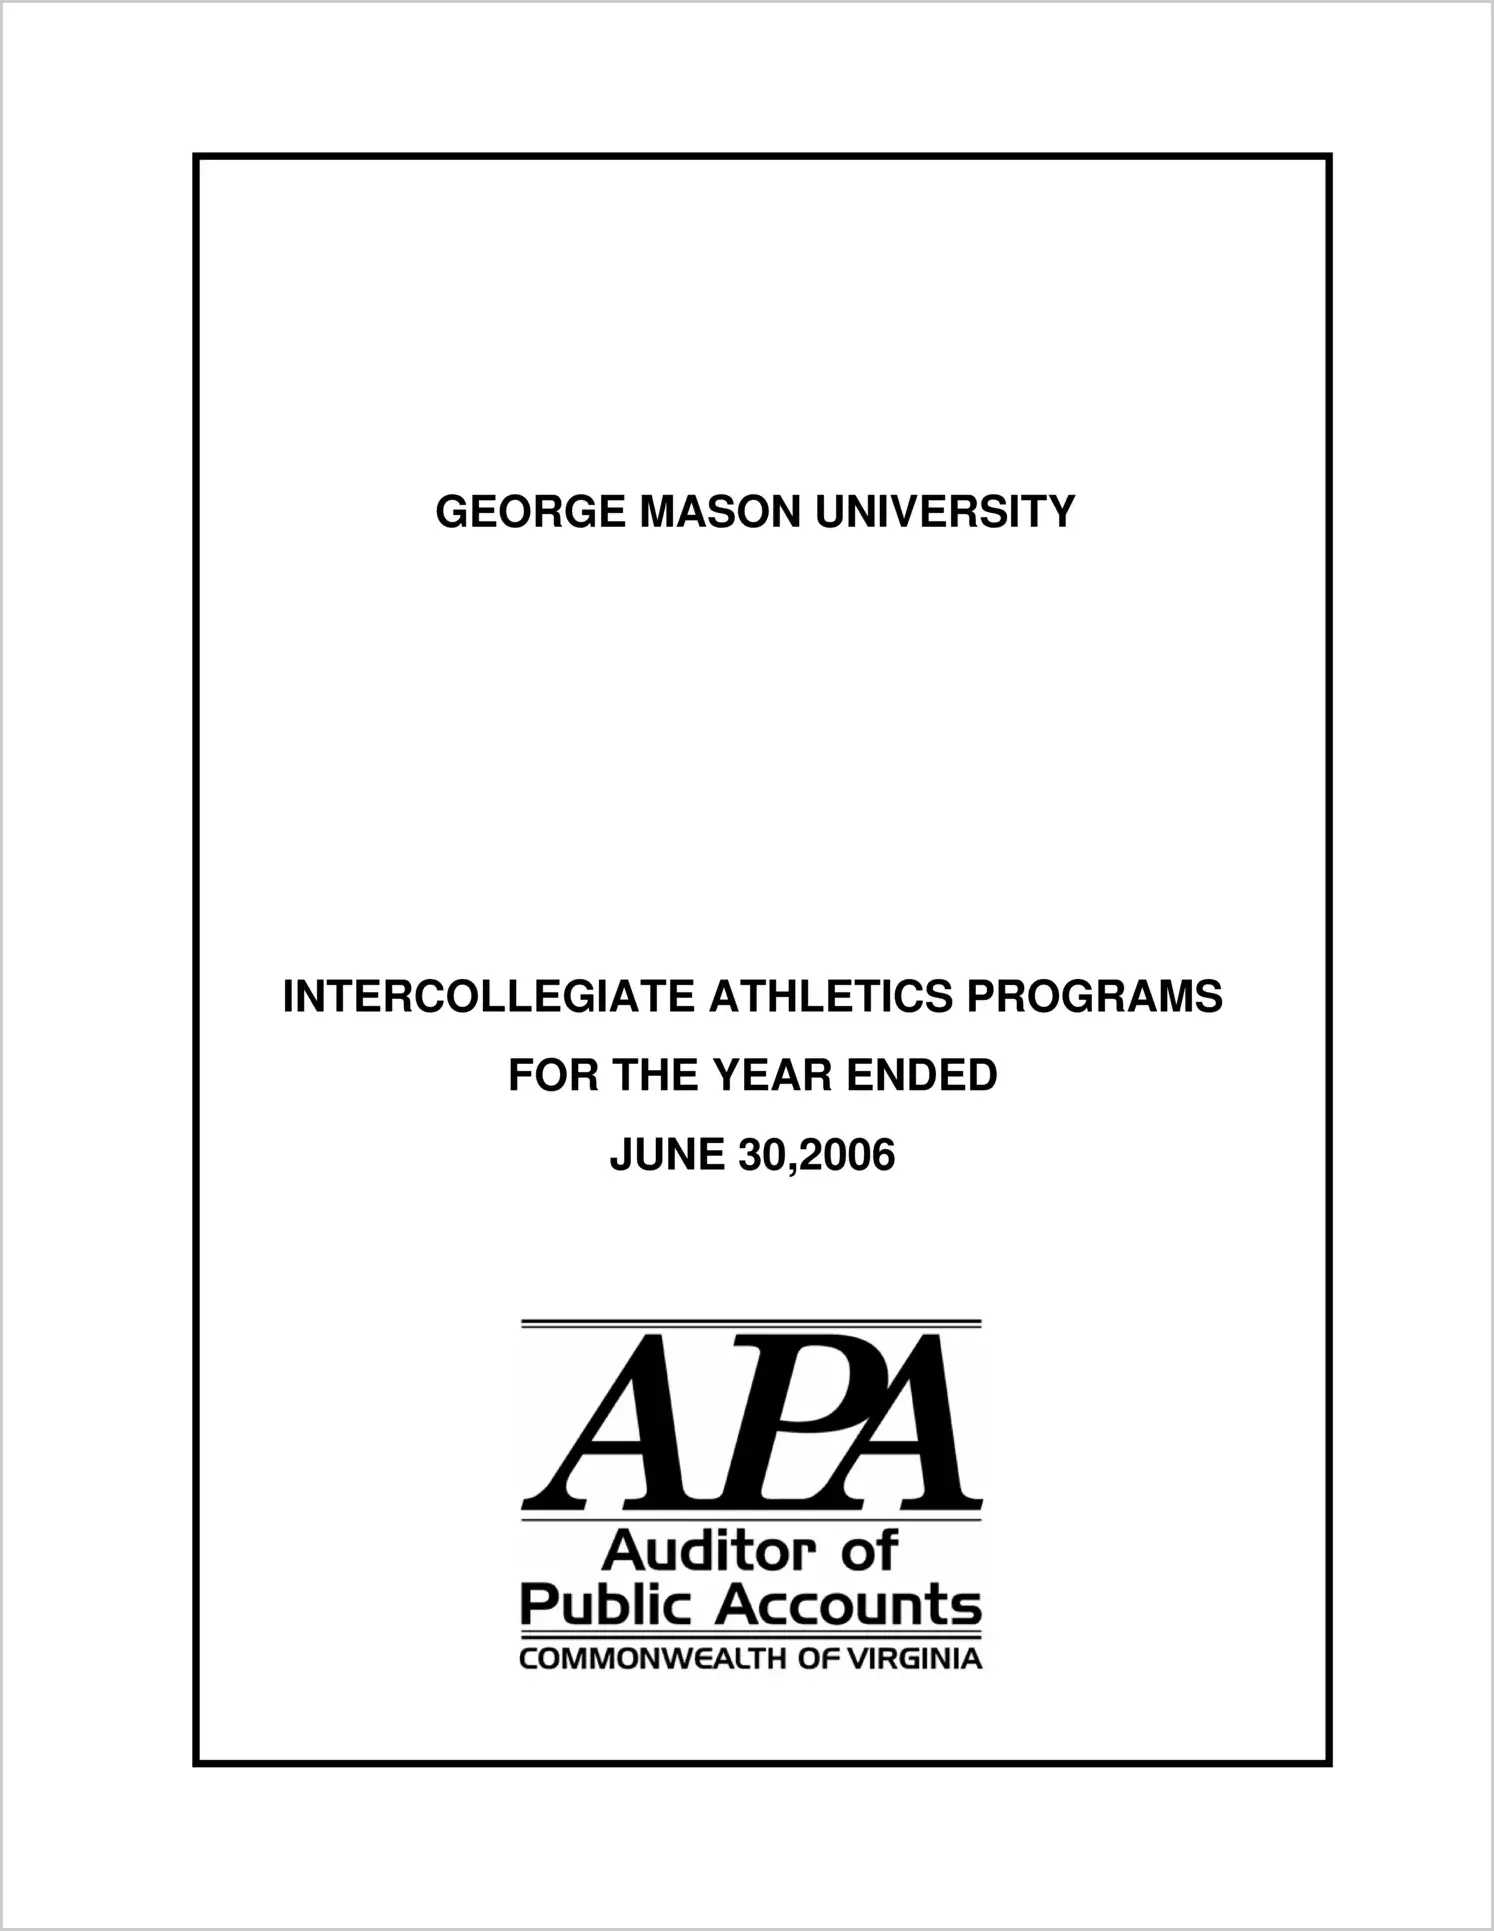 George Mason University Intercollegiate Athletics Programs for the year ended June 30, 2006